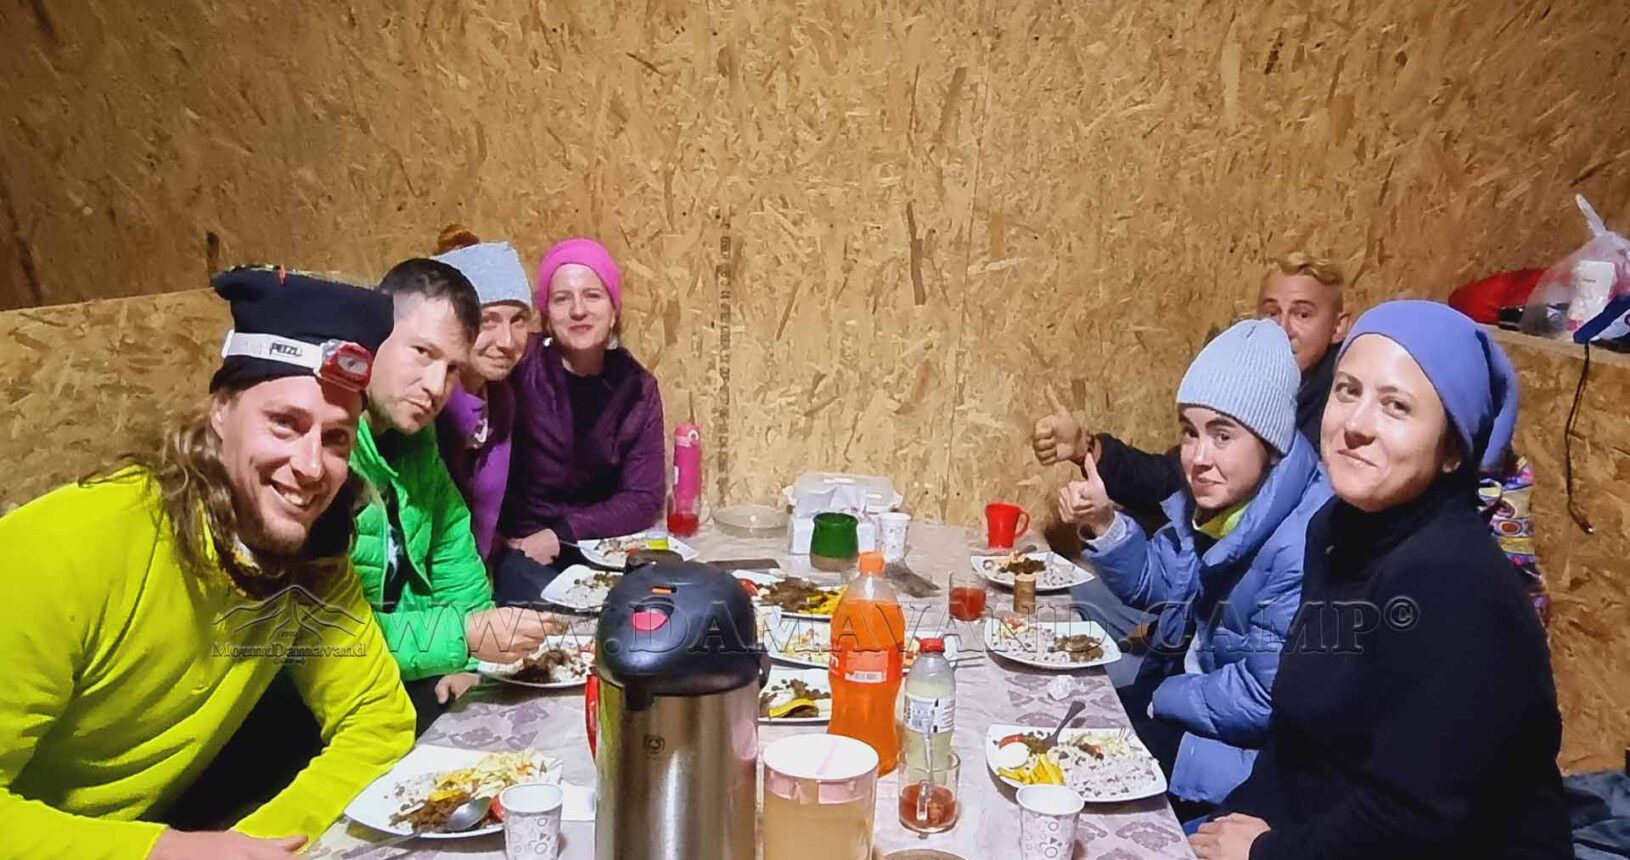 Meal Service at Camp 3 (old hut) of Mount Damavand